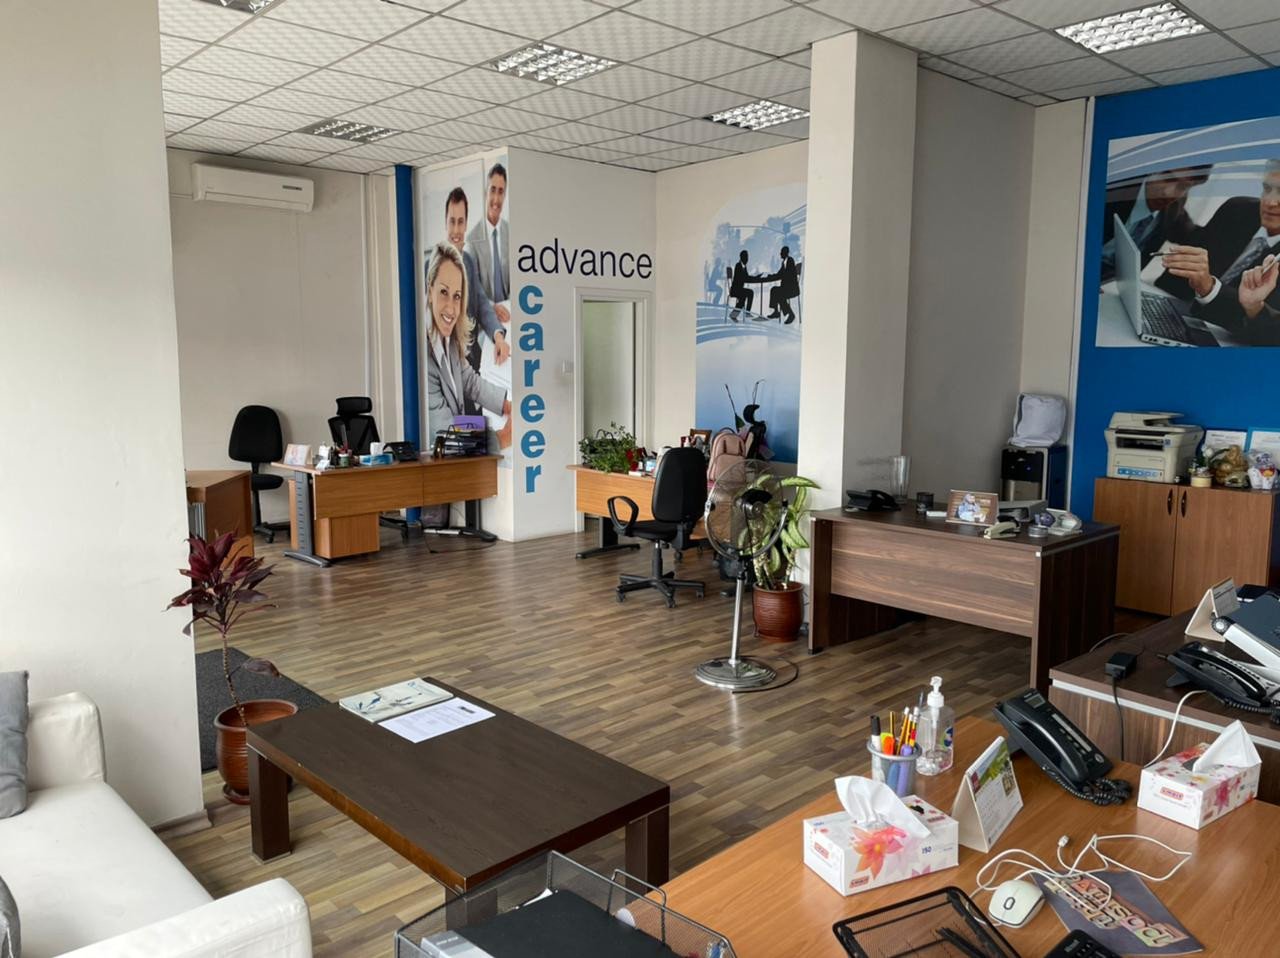 Property for Rent: Commercial (Office) in Katholiki, Limassol for Rent | Key Realtor Cyprus